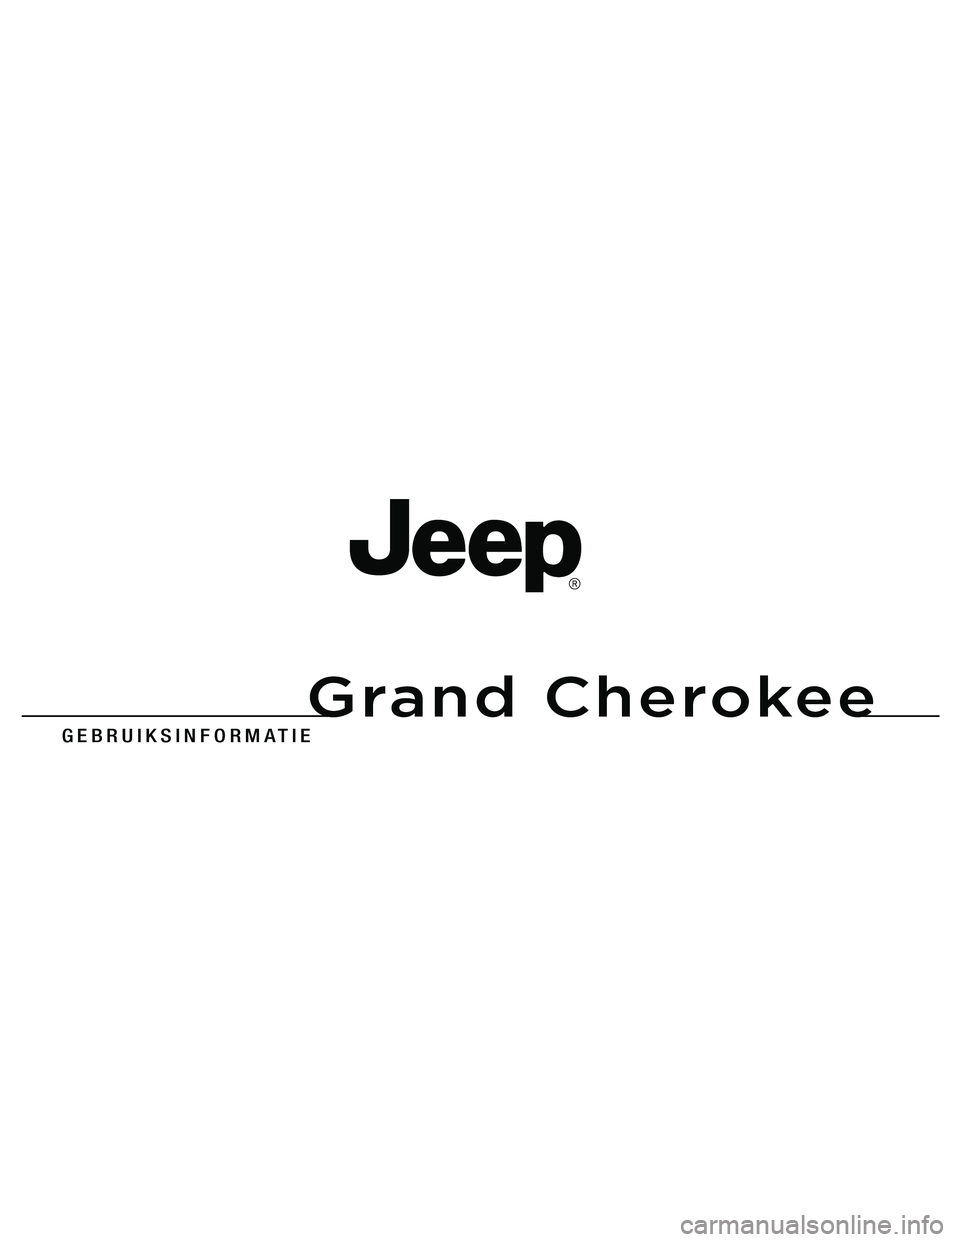 JEEP GRAND CHEROKEE 2011  Instructieboek (in Dutch) 
Grand Cherokee
G E B R U I K S I N \f O R M A \b I E
G r a n d   C h e r o k e e
11WK741-126-DUT-AA
                  \k        Gedruk\f in E\kur\bpa 11 